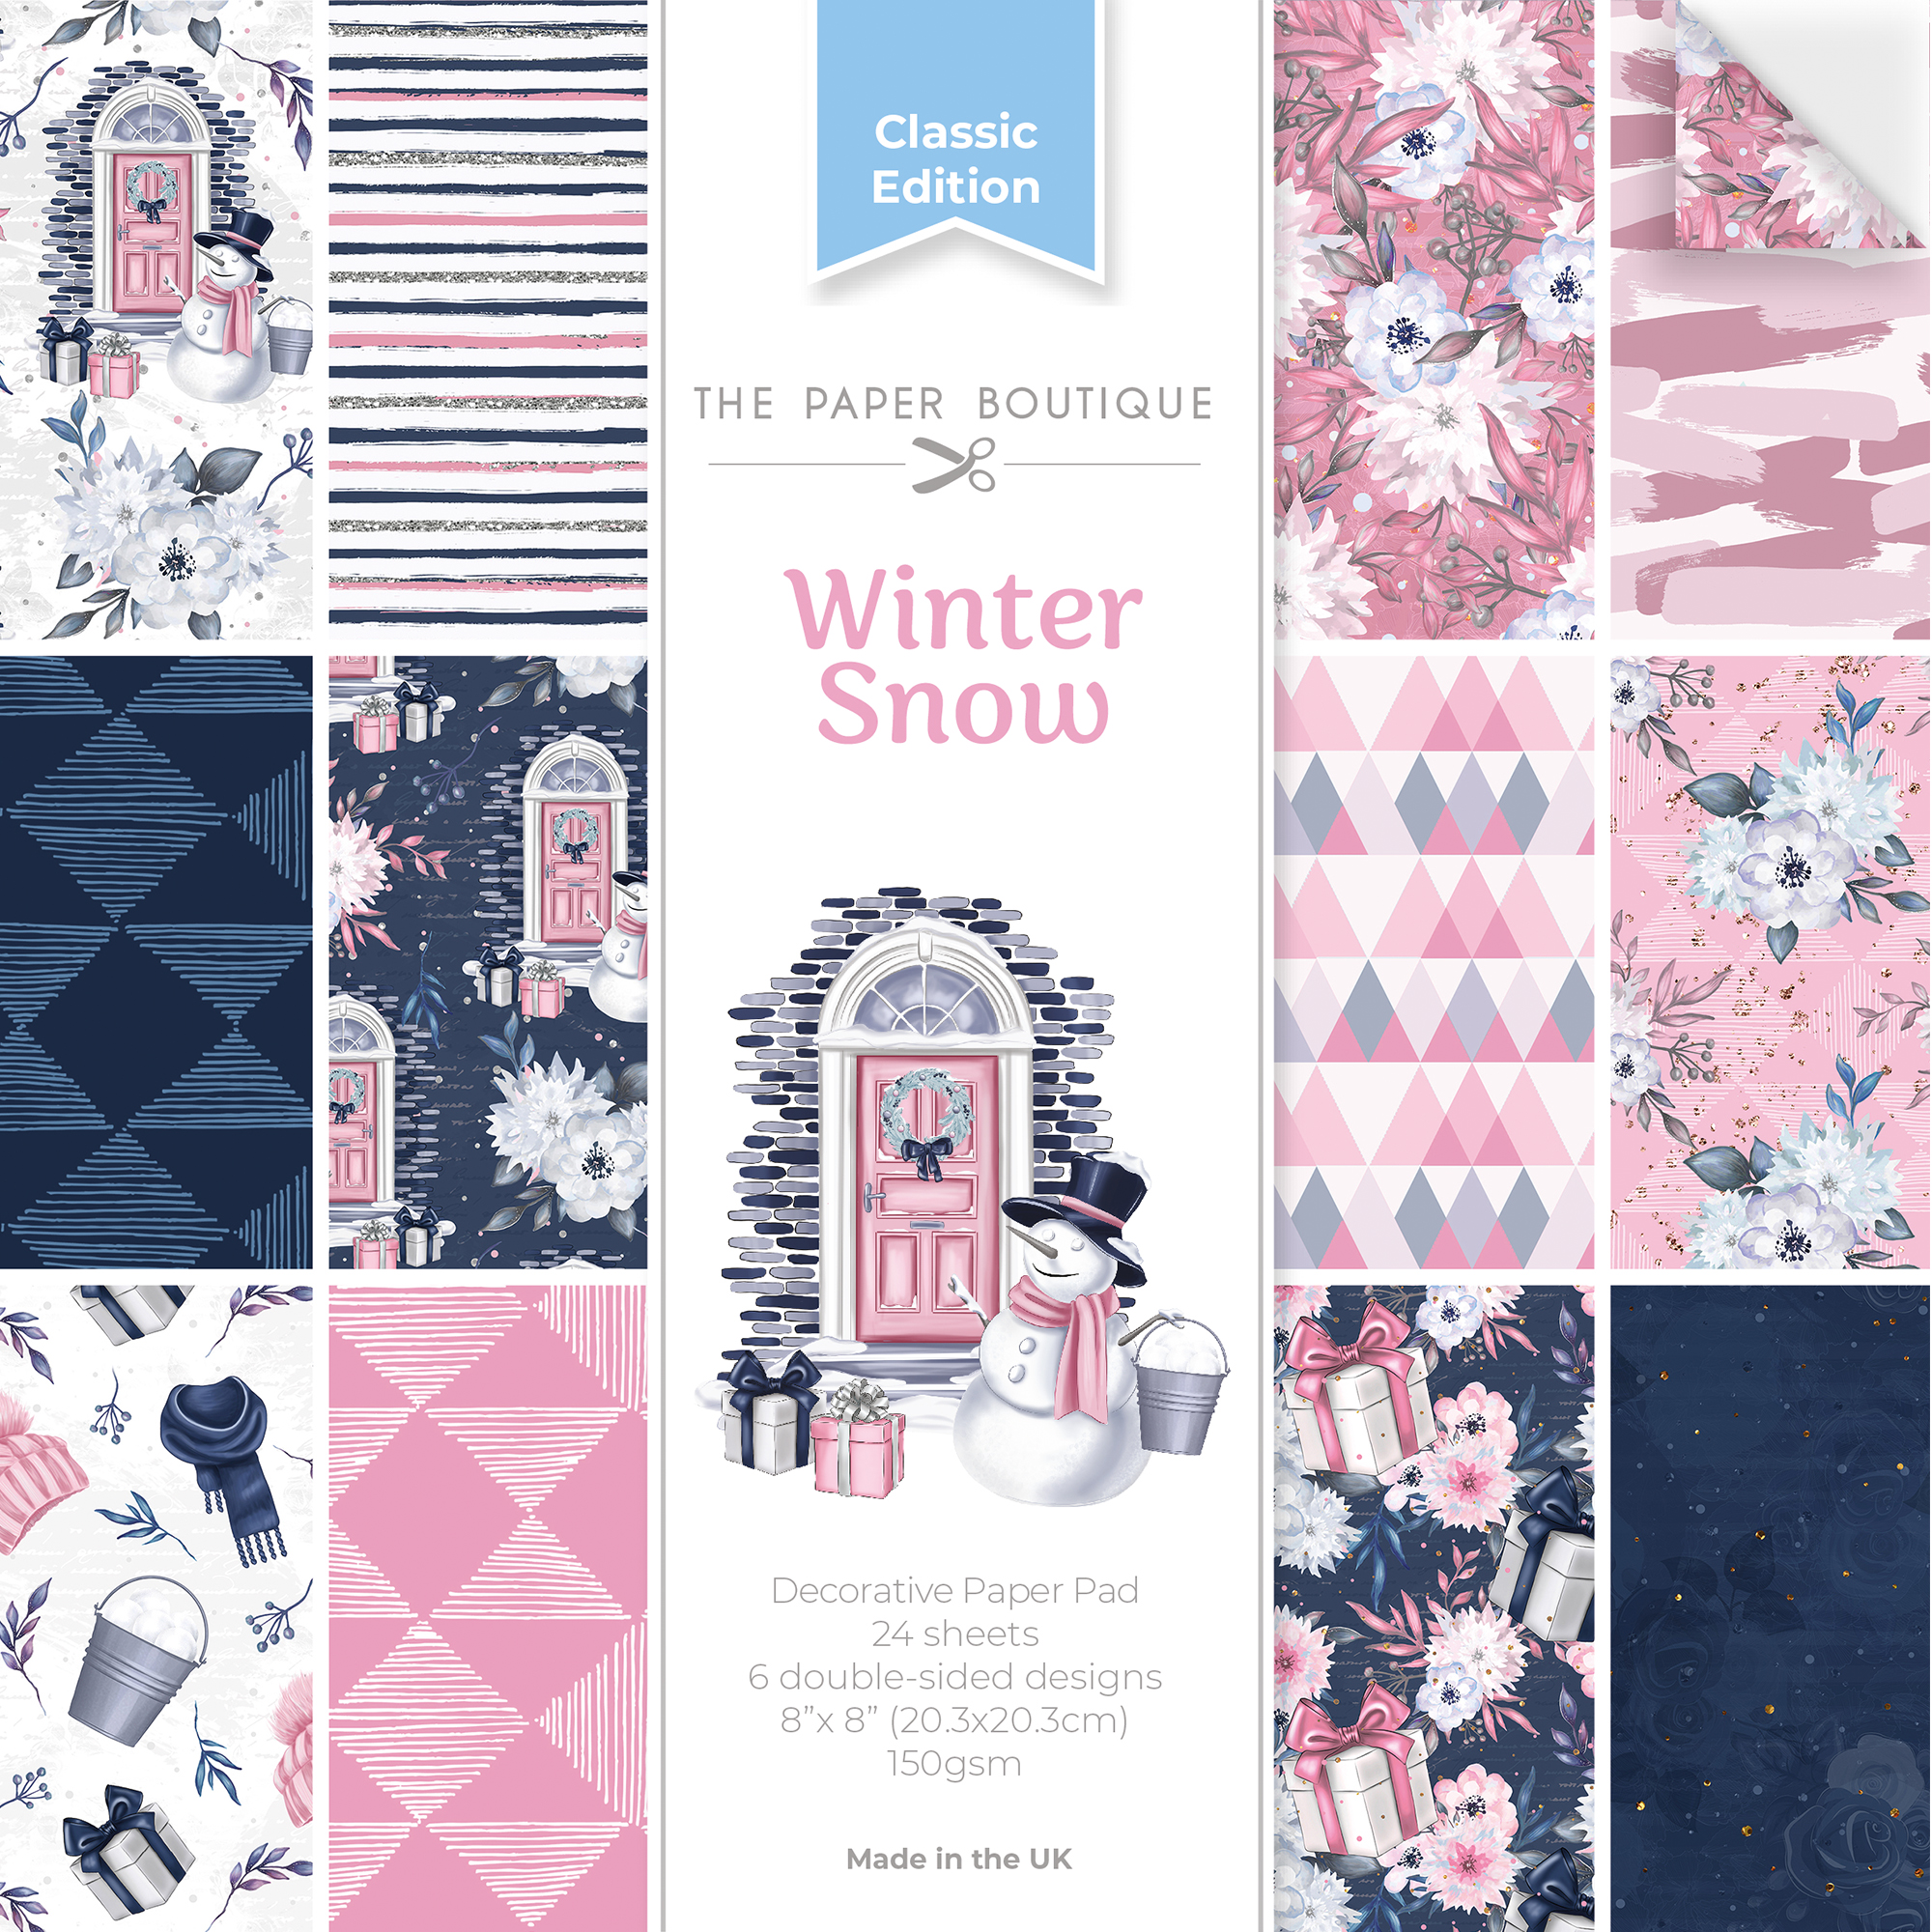 The Paper Boutique - Winter Snow - 8x8 Decorative Paper Pad PB2142